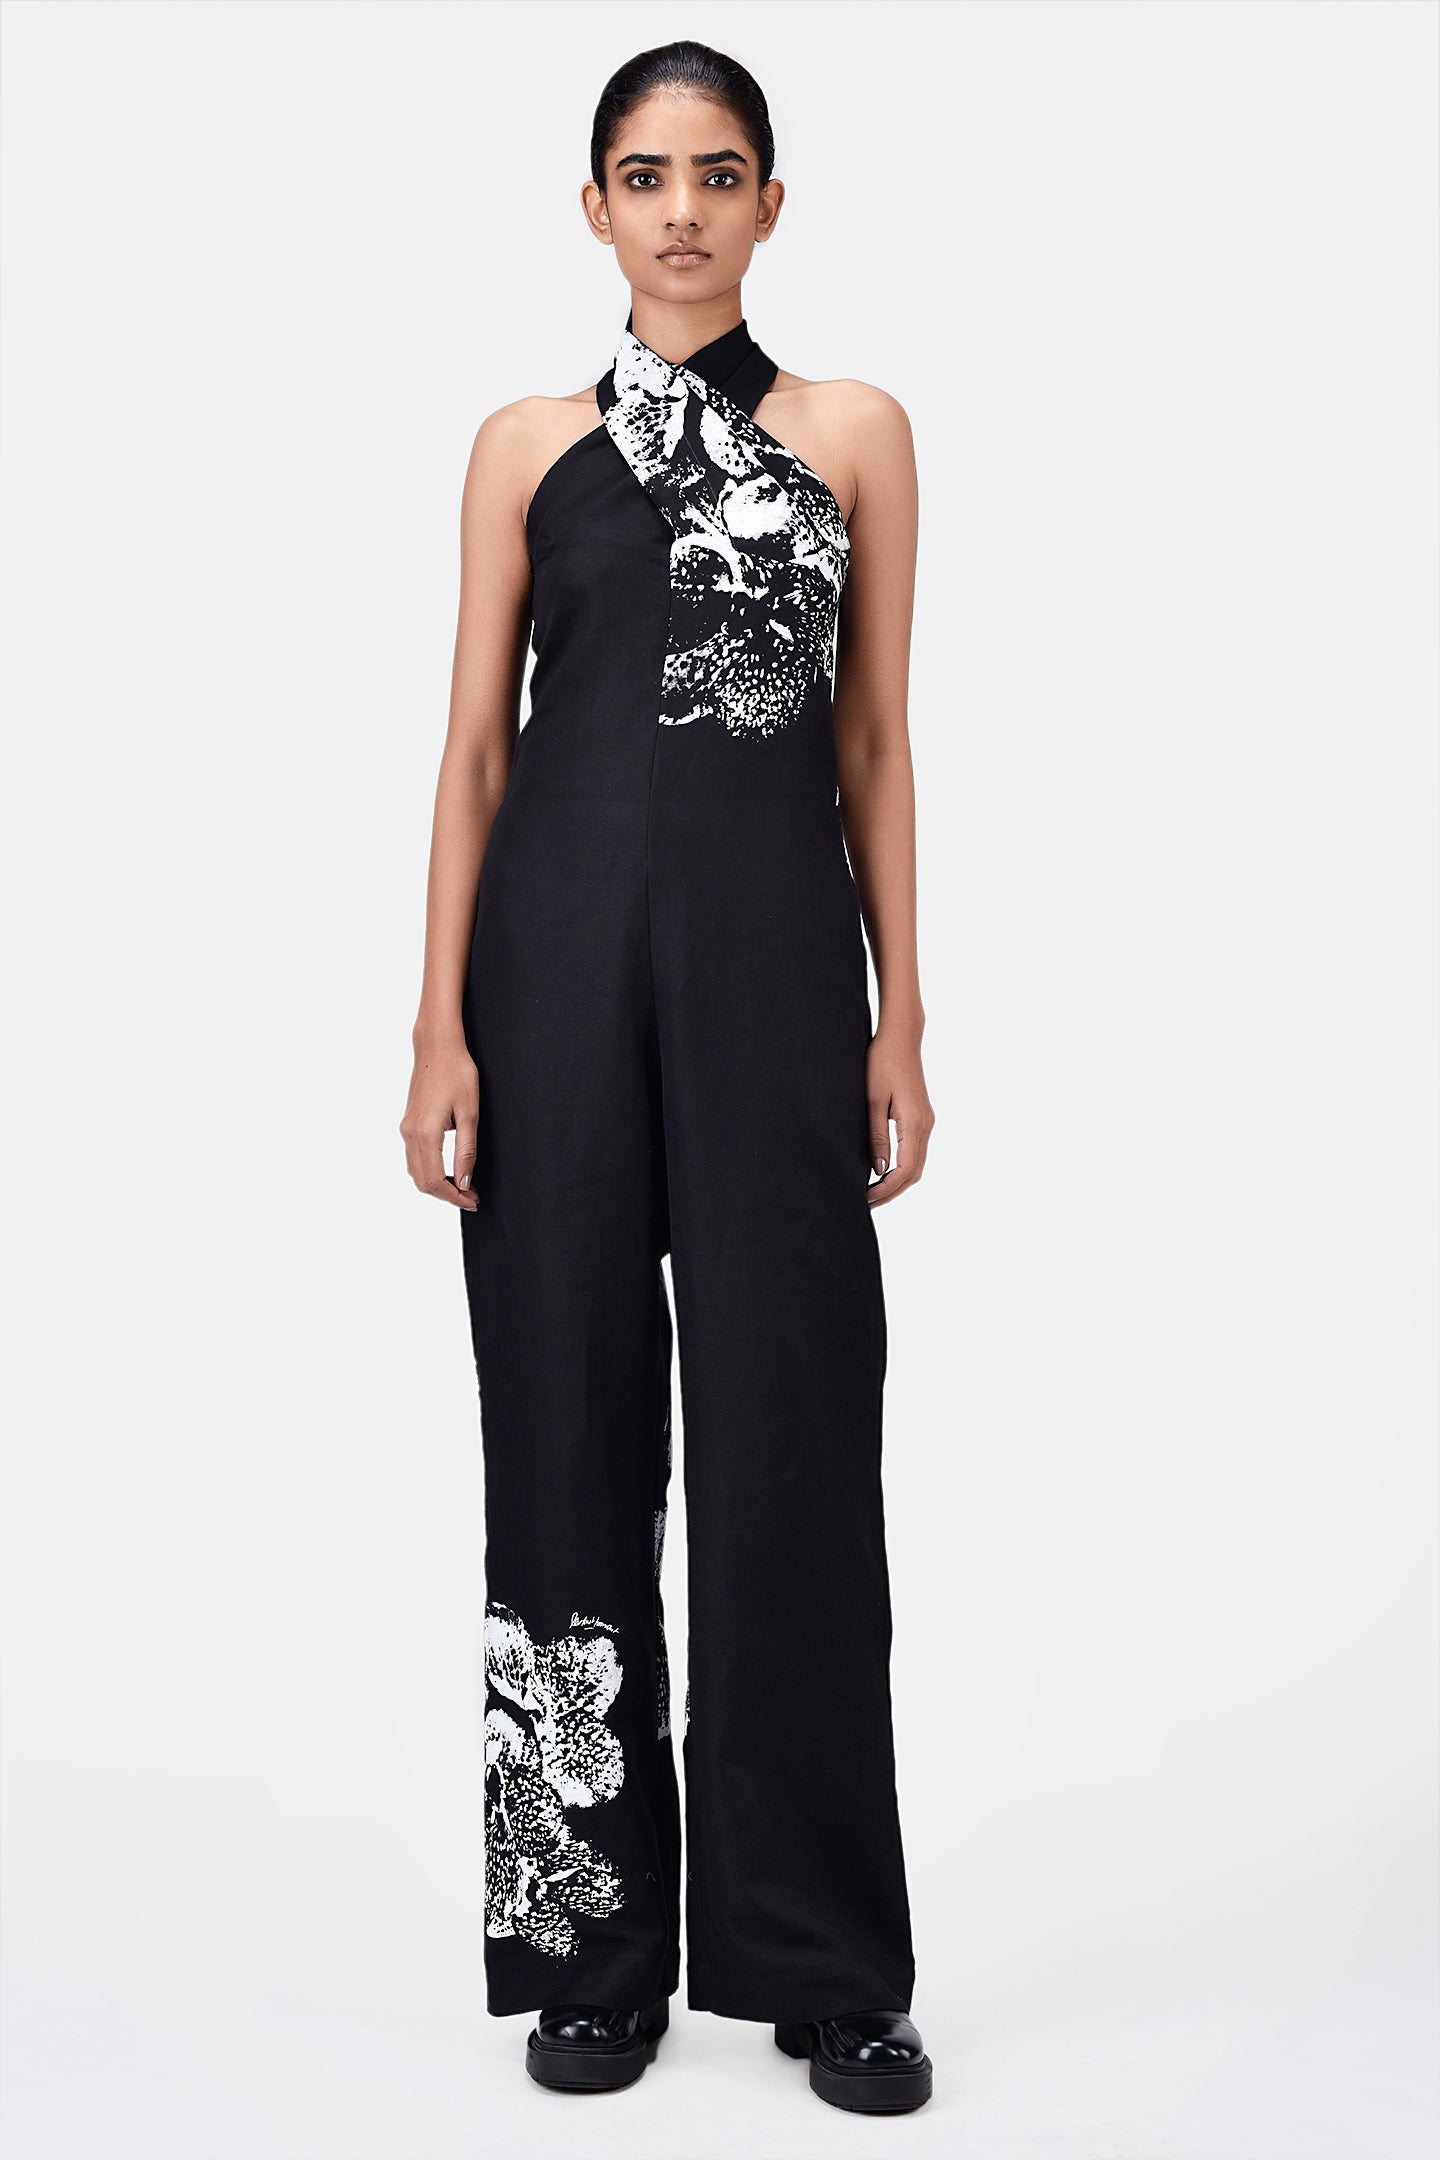 Elegant Orchid Print Jumpsuit with Back Neck Tie-Up